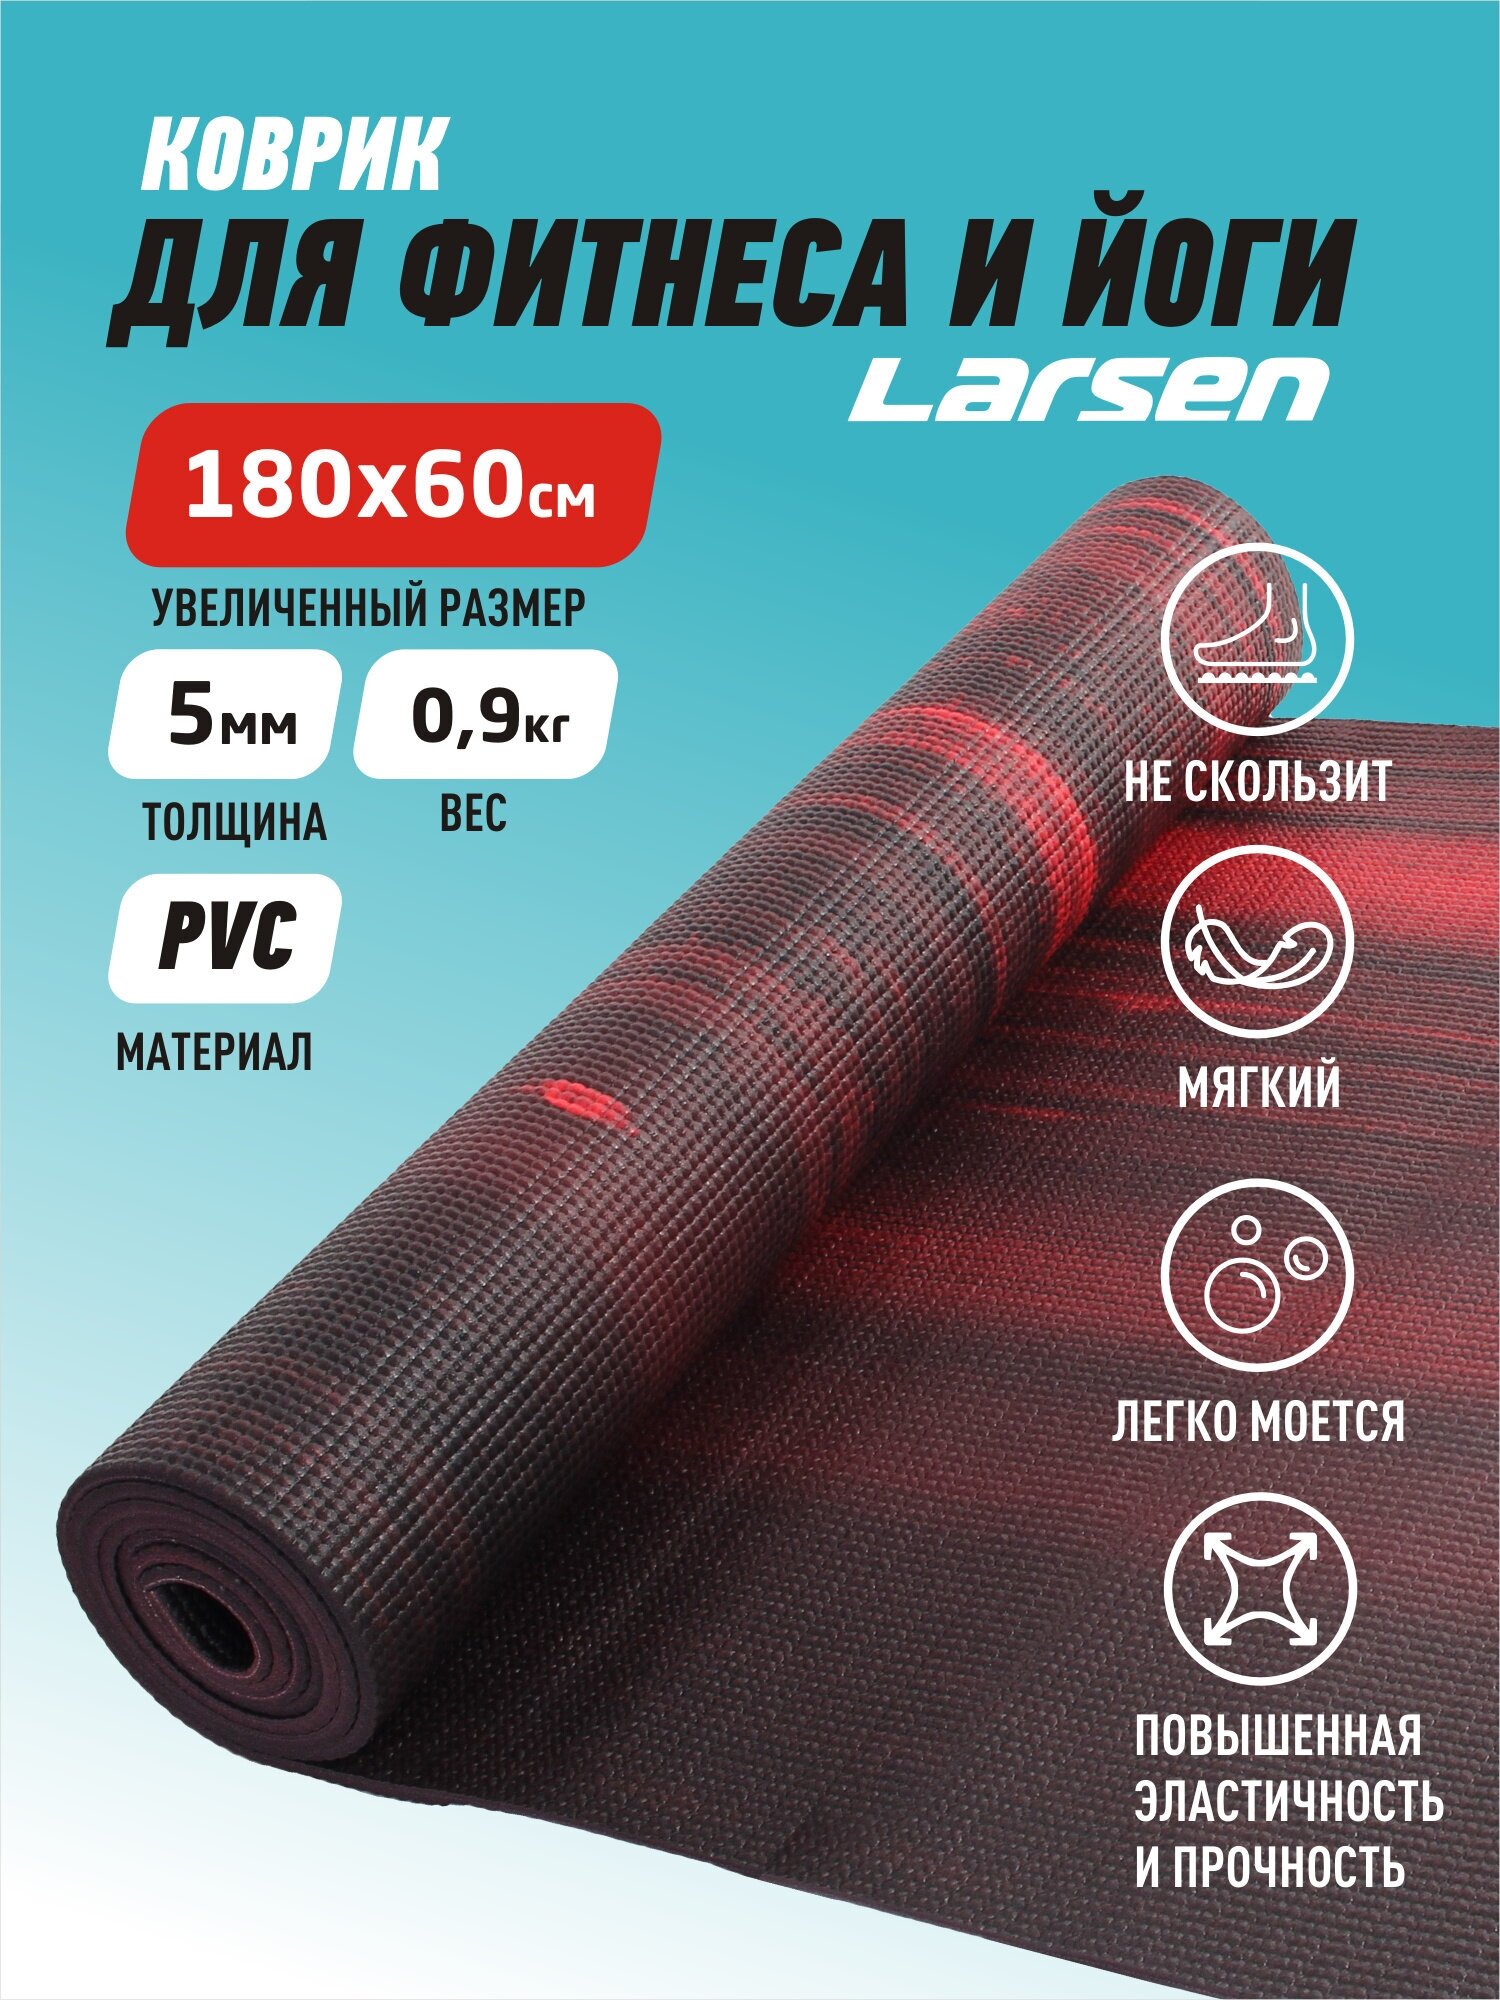 Коврик для фитнеса и йоги Larsen PVC multicolor р180х60х0,5см